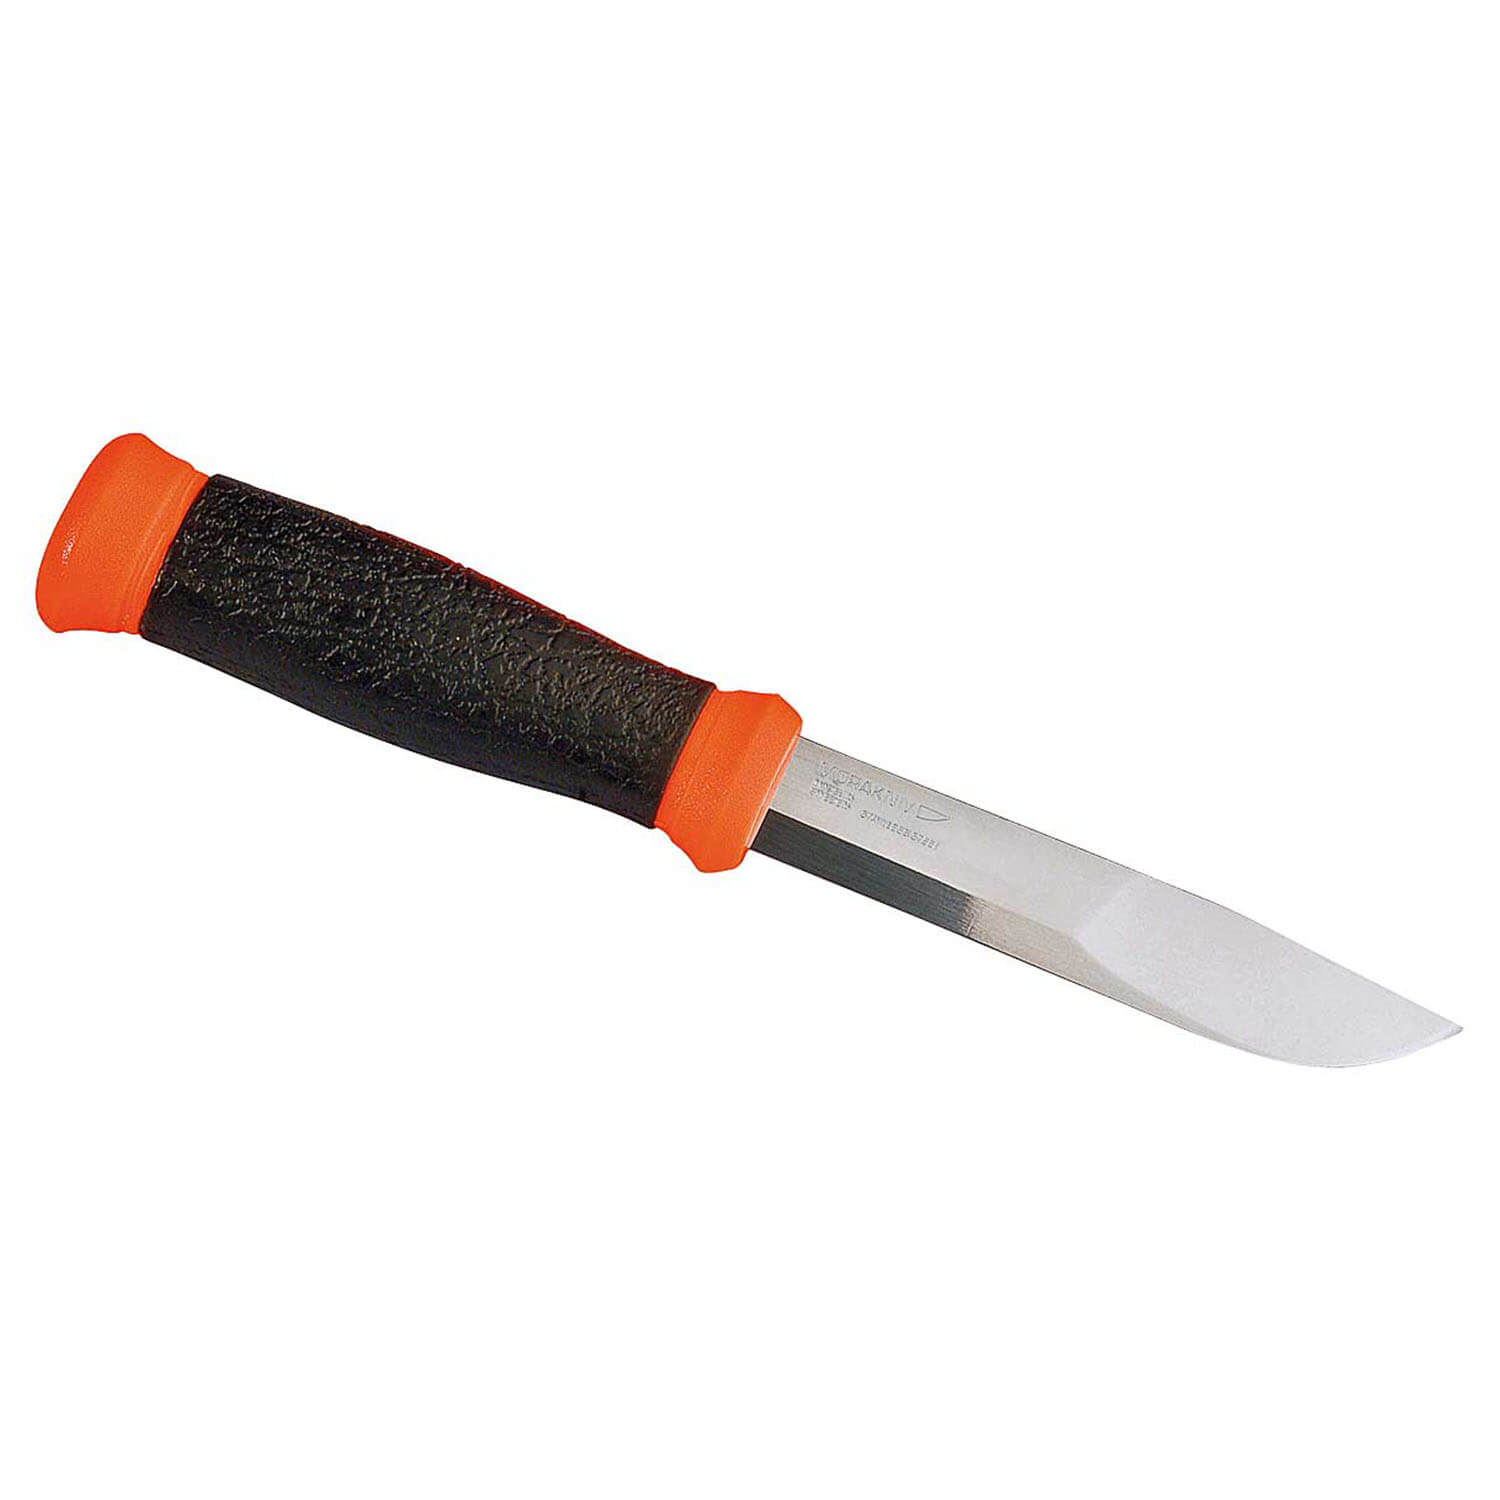 Mora Outdoor 2000 Knife (orange) - Hunting Knives